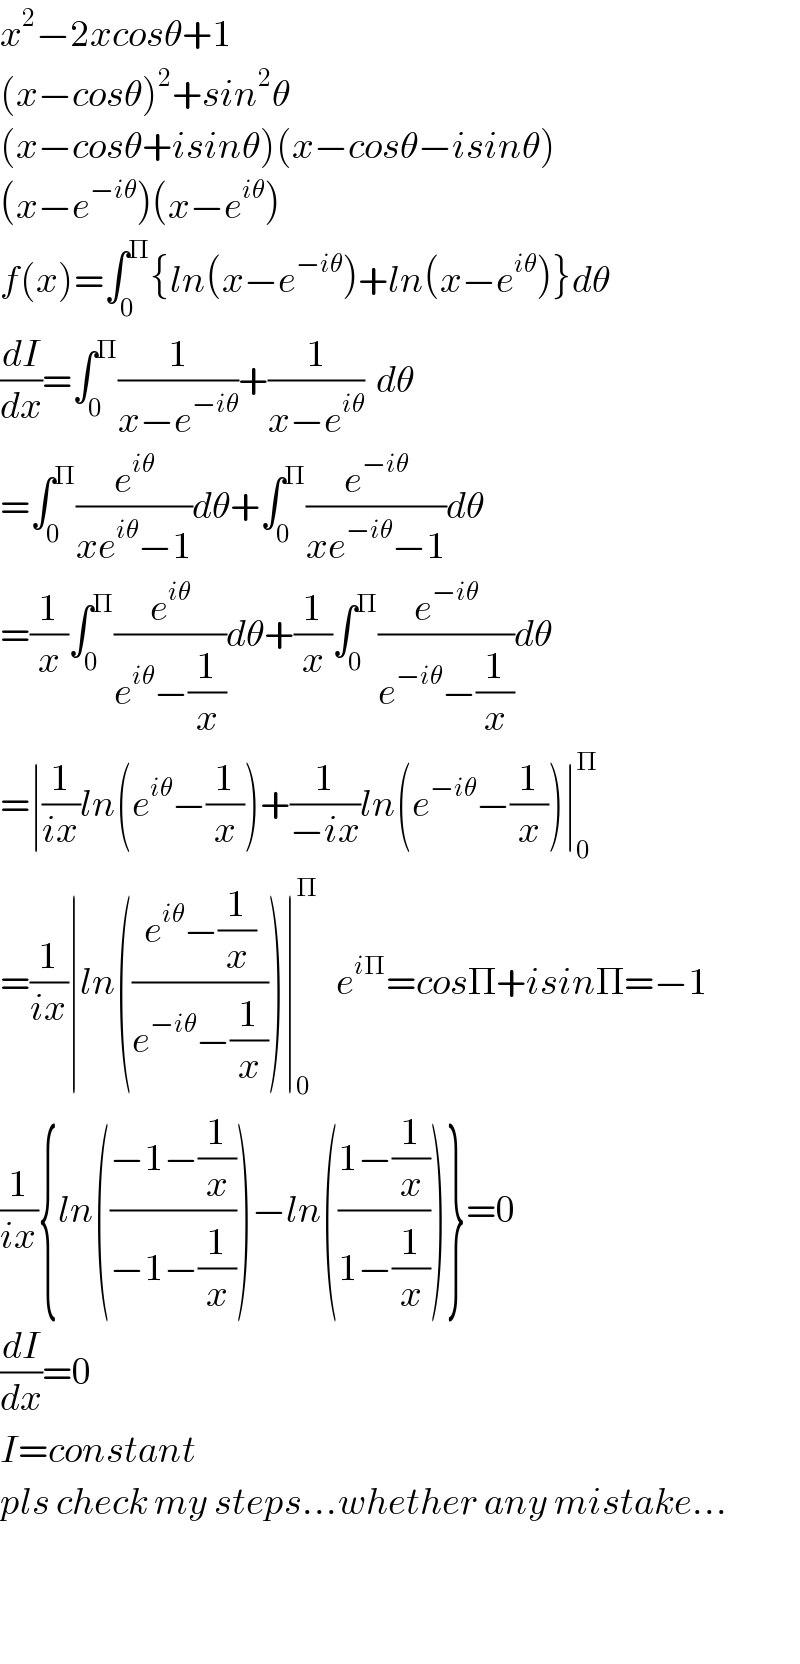 x^2 −2xcosθ+1  (x−cosθ)^2 +sin^2 θ  (x−cosθ+isinθ)(x−cosθ−isinθ)  (x−e^(−iθ) )(x−e^(iθ) )  f(x)=∫_0 ^Π {ln(x−e^(−iθ) )+ln(x−e^(iθ) )}dθ  (dI/dx)=∫_0 ^Π (1/(x−e^(−iθ) ))+(1/(x−e^(iθ) ))  dθ  =∫_0 ^Π (e^(iθ) /(xe^(iθ) −1))dθ+∫_0 ^Π (e^(−iθ) /(xe^(−iθ) −1))dθ  =(1/x)∫_0 ^Π (e^(iθ) /(e^(iθ) −(1/x)))dθ+(1/x)∫_0 ^Π (e^(−iθ) /(e^(−iθ) −(1/x)))dθ  =∣(1/(ix))ln(e^(iθ) −(1/x))+(1/(−ix))ln(e^(−iθ) −(1/x))∣_0 ^Π   =(1/(ix))∣ln(((e^(iθ) −(1/x))/(e^(−iθ) −(1/x))))∣_0 ^Π    e^(iΠ) =cosΠ+isinΠ=−1  (1/(ix)){ln(((−1−(1/x))/(−1−(1/x))))−ln(((1−(1/x))/(1−(1/x))))}=0  (dI/dx)=0  I=constant  pls check my steps...whether any mistake...      